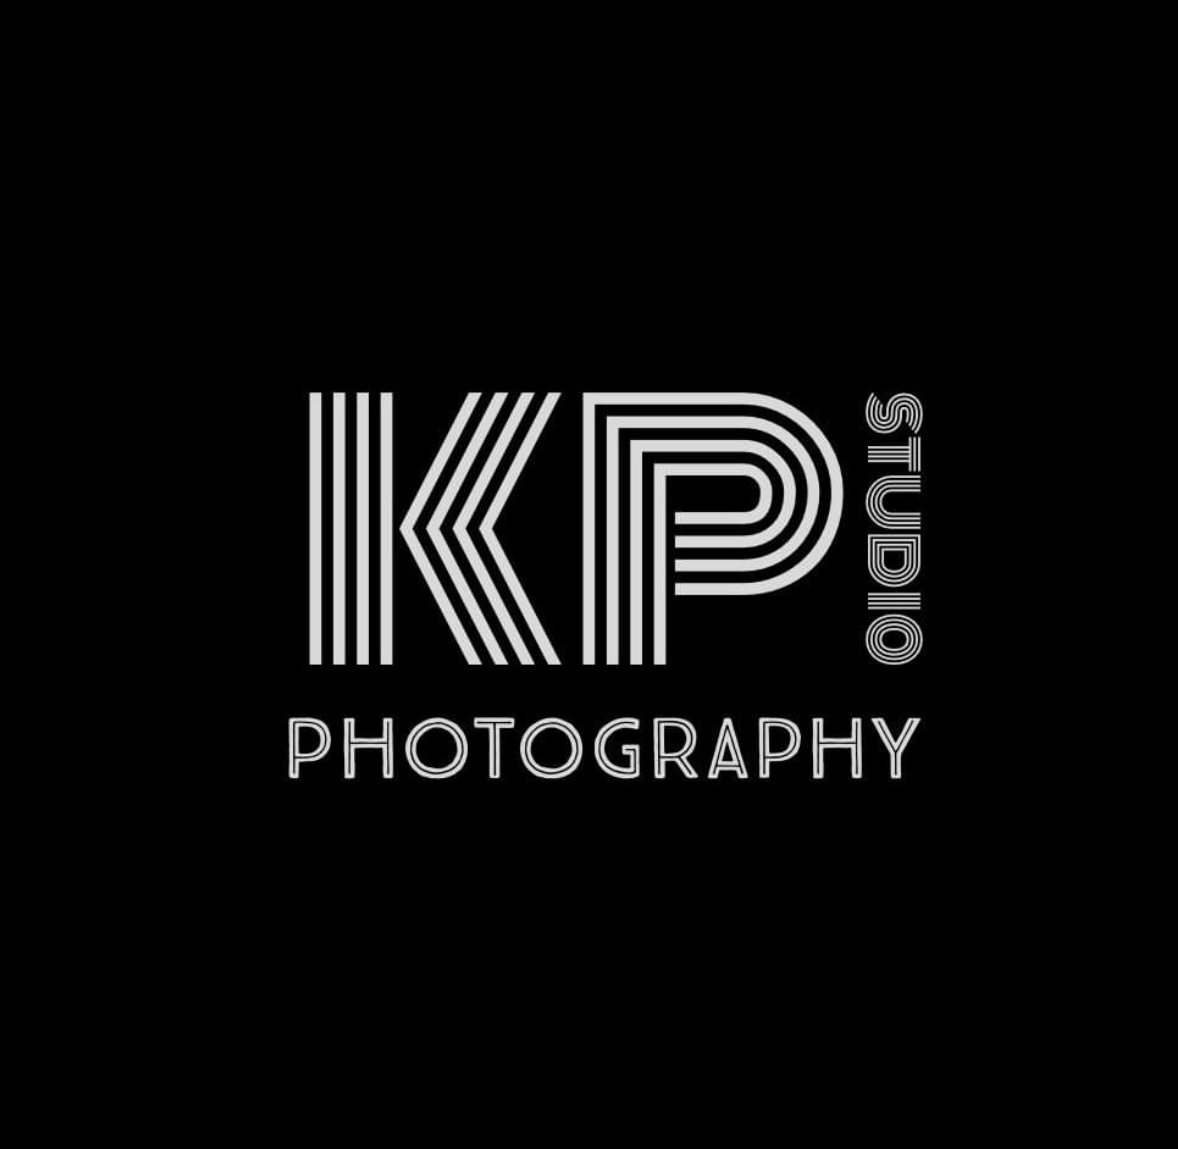 KP STUDI0 PHOTOGRAPHY